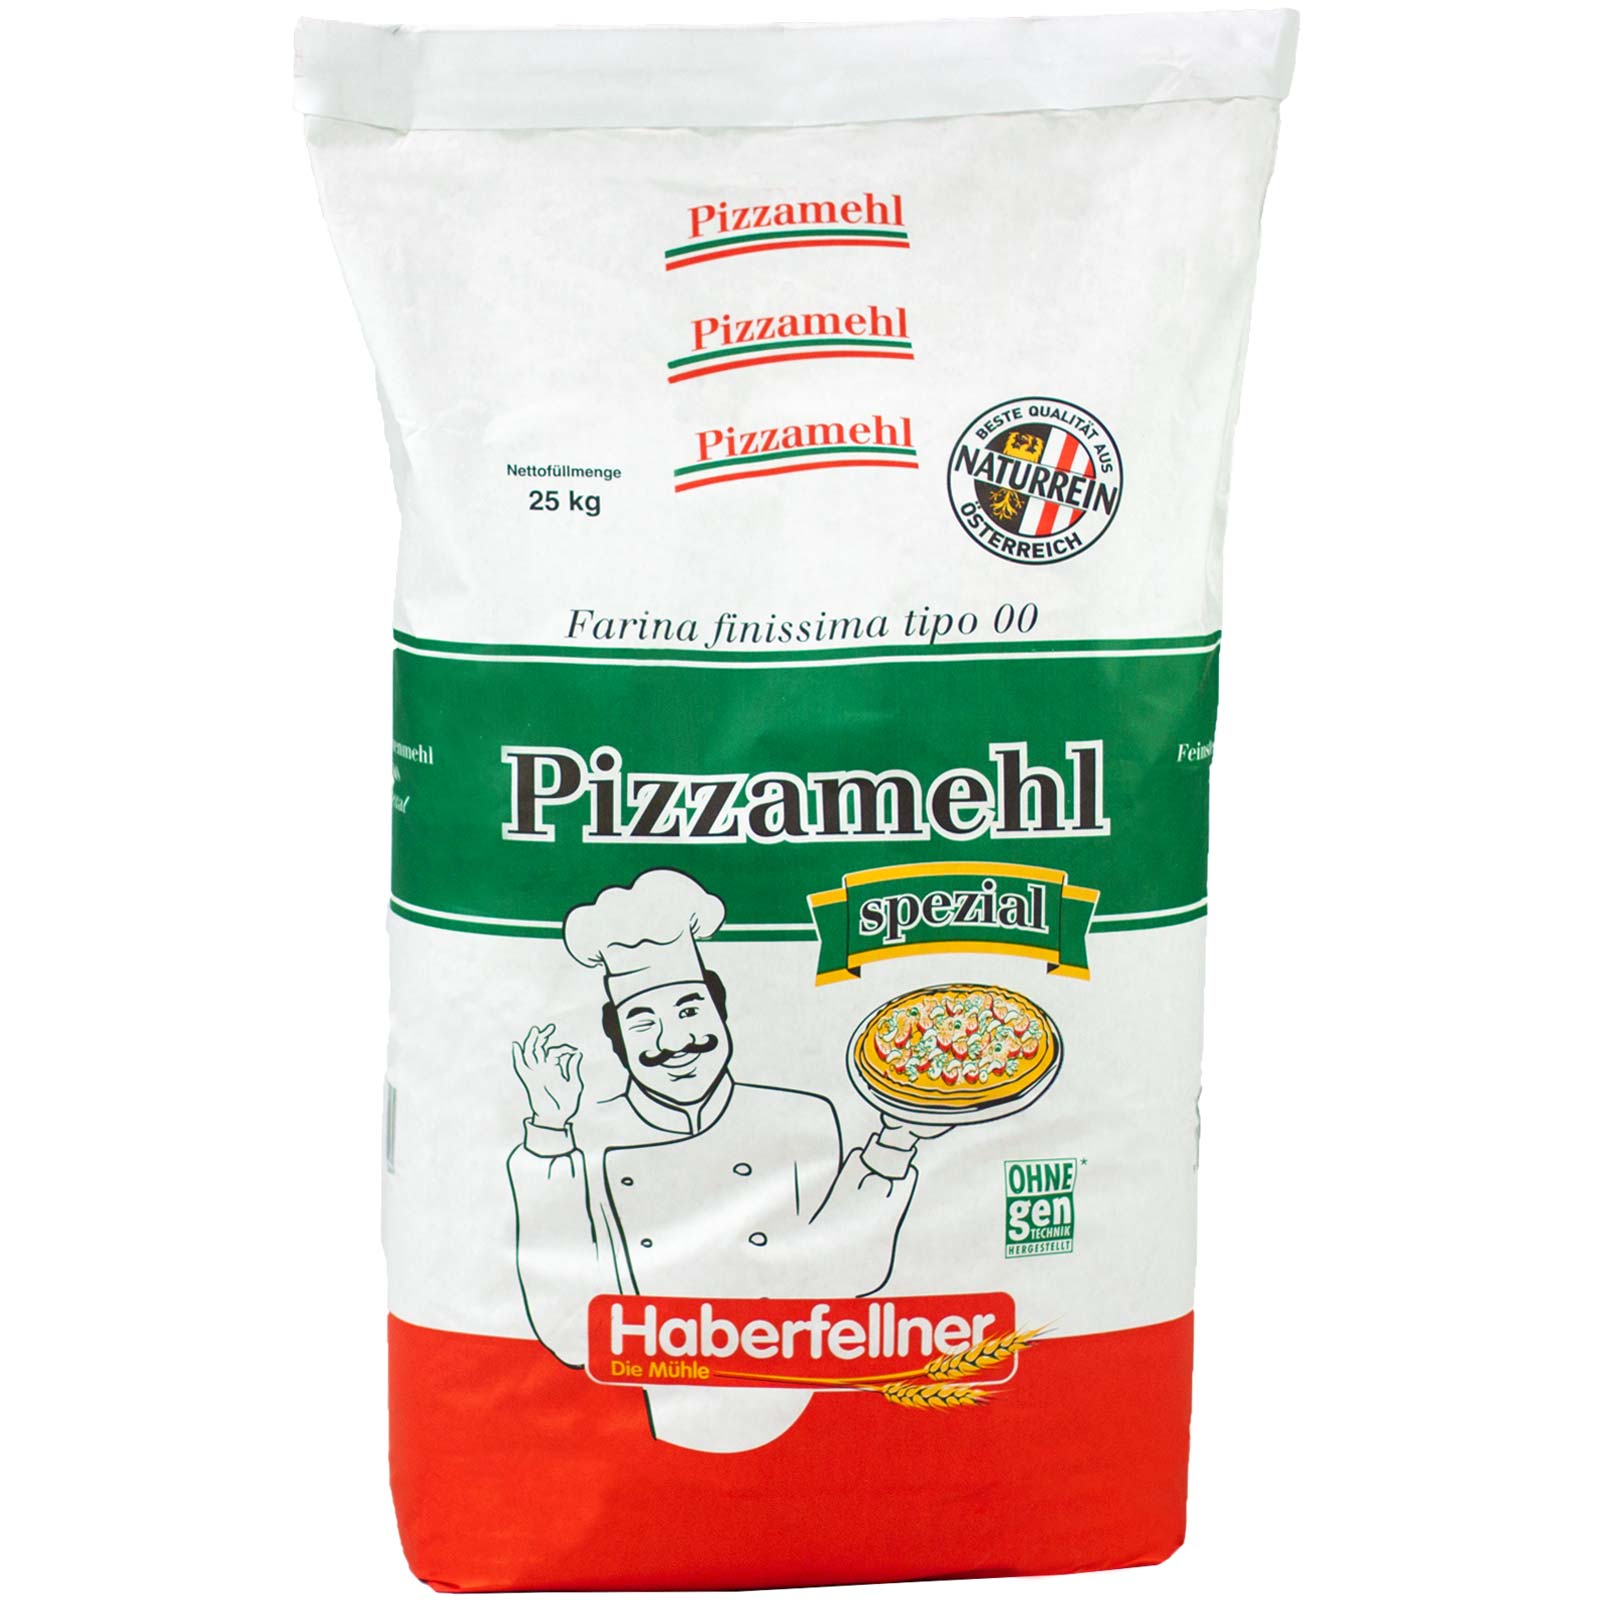 Haberfellner Pizza Flour Special Type 550 / W700 / Tipo 00